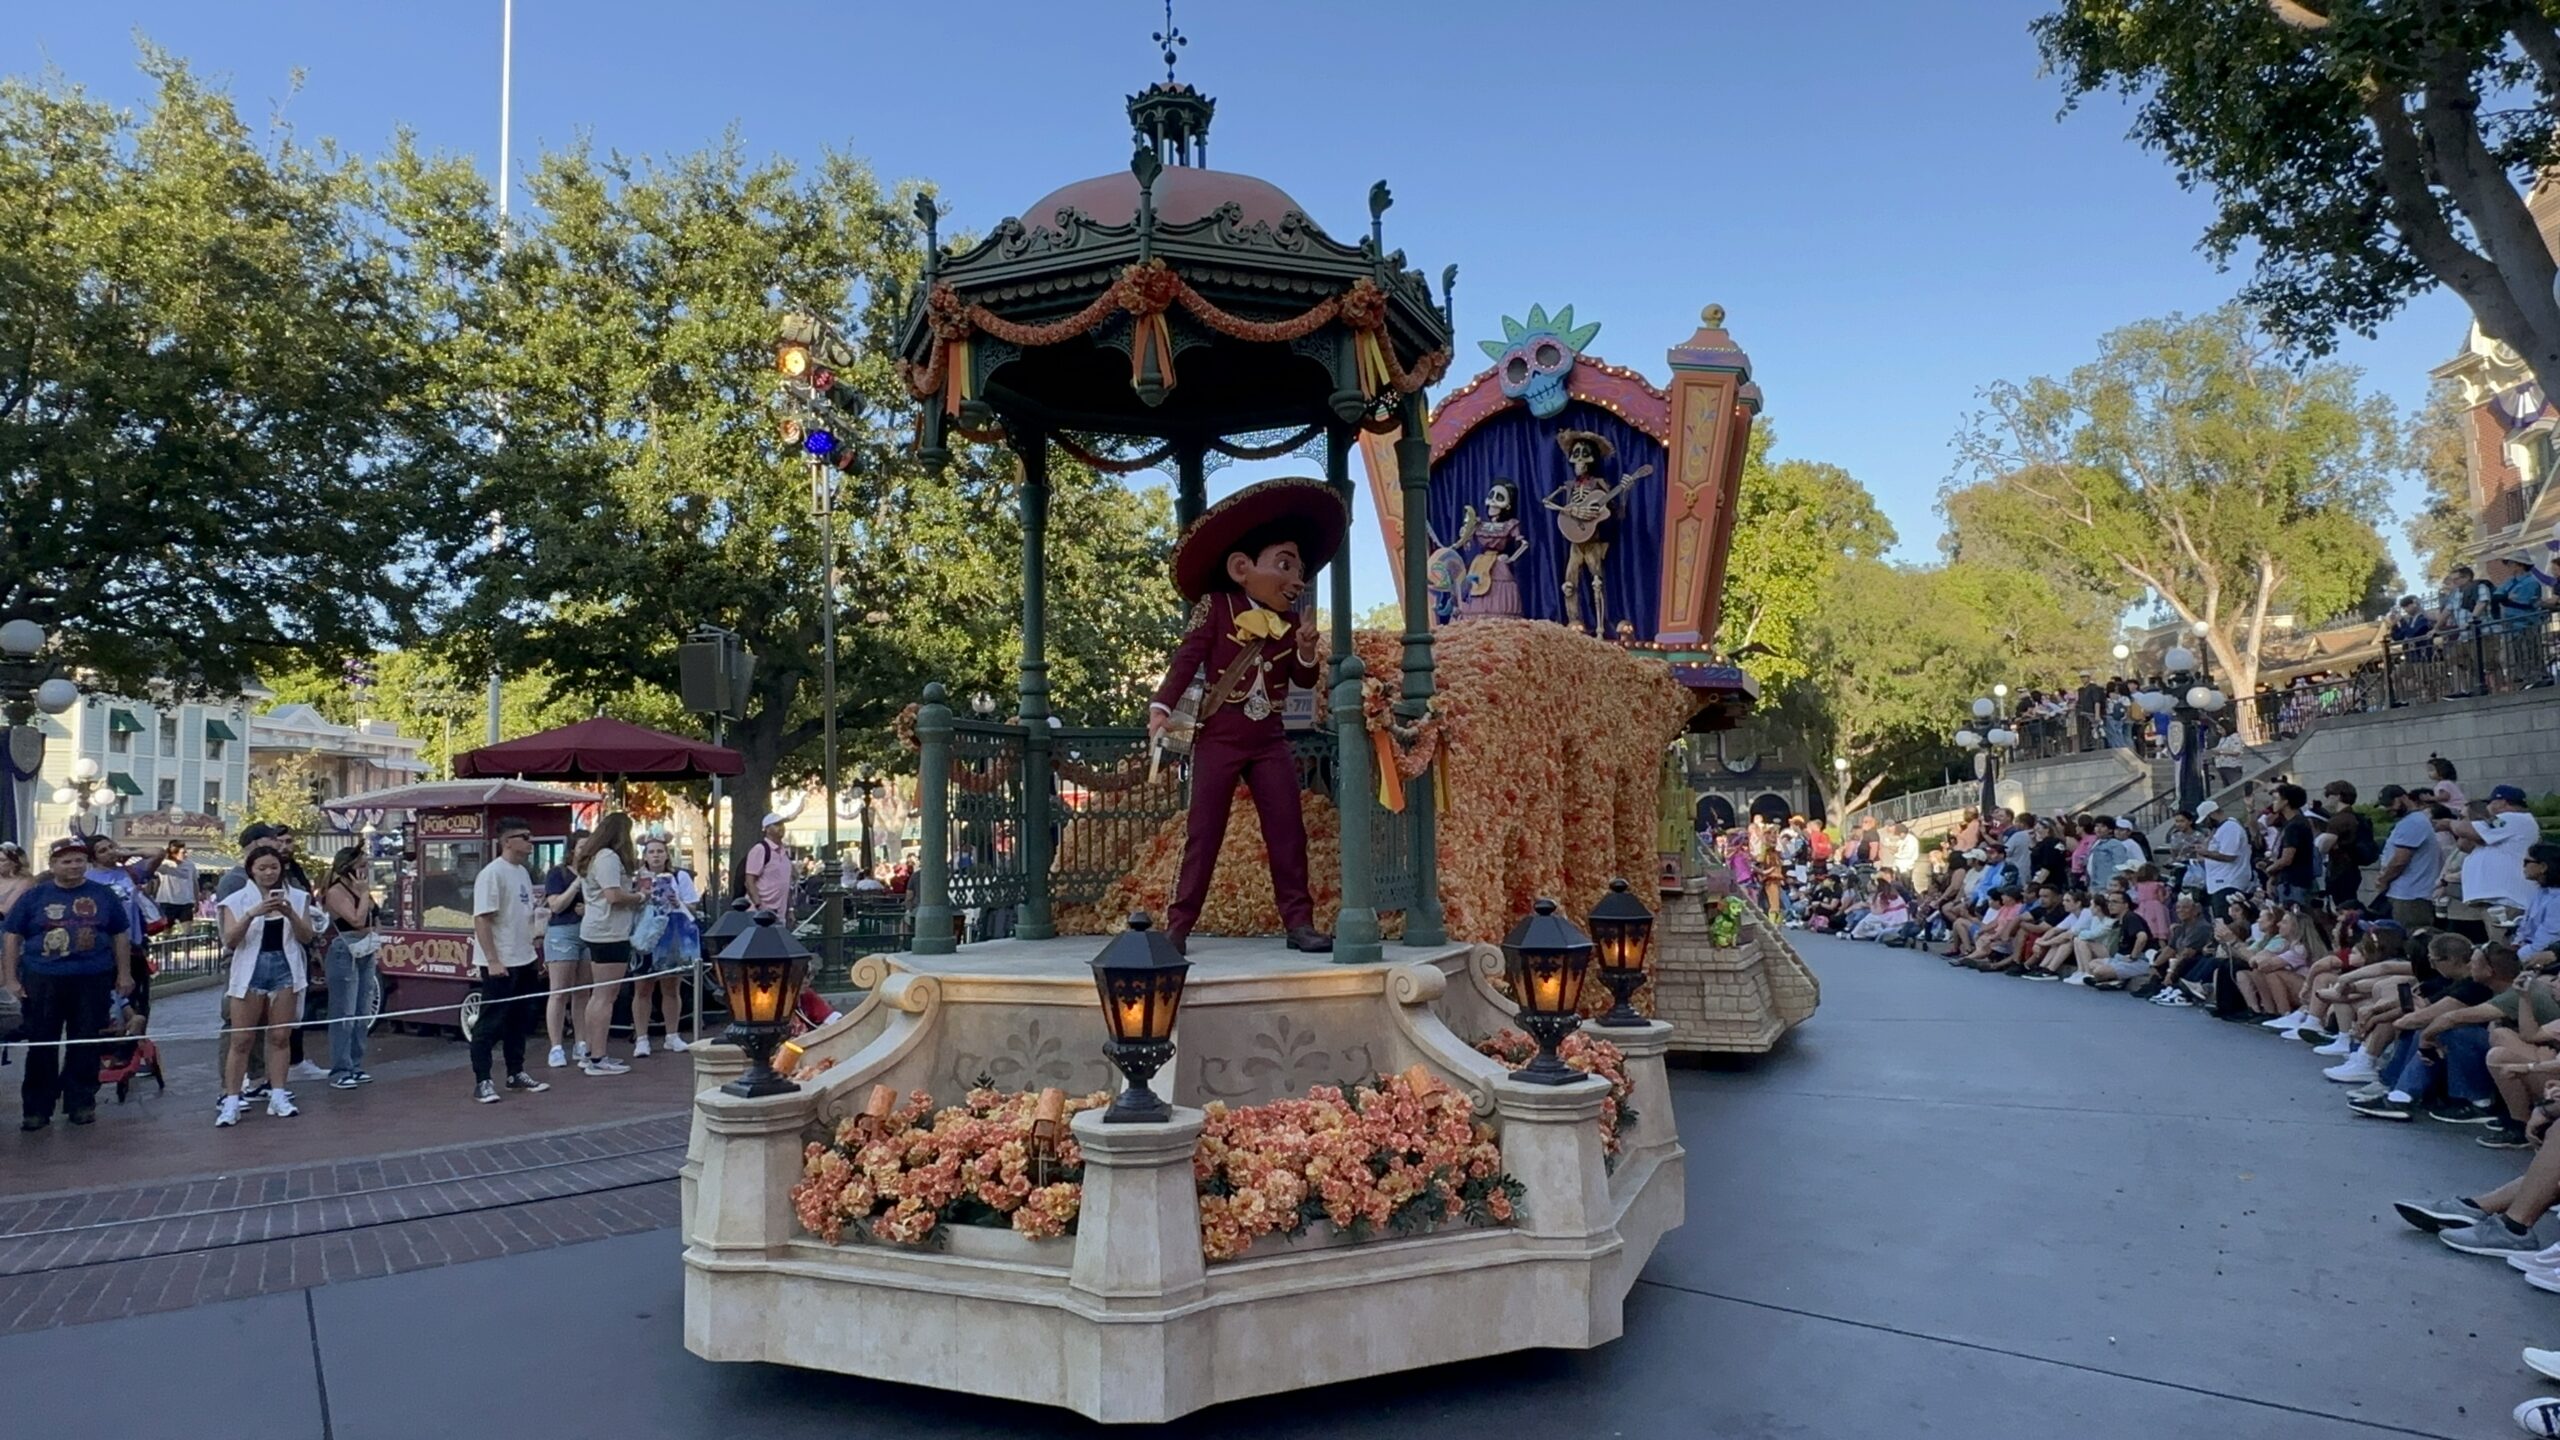 Disneyland's Spectacular "Magic Happens" Parade Celebrating Disneyland 100